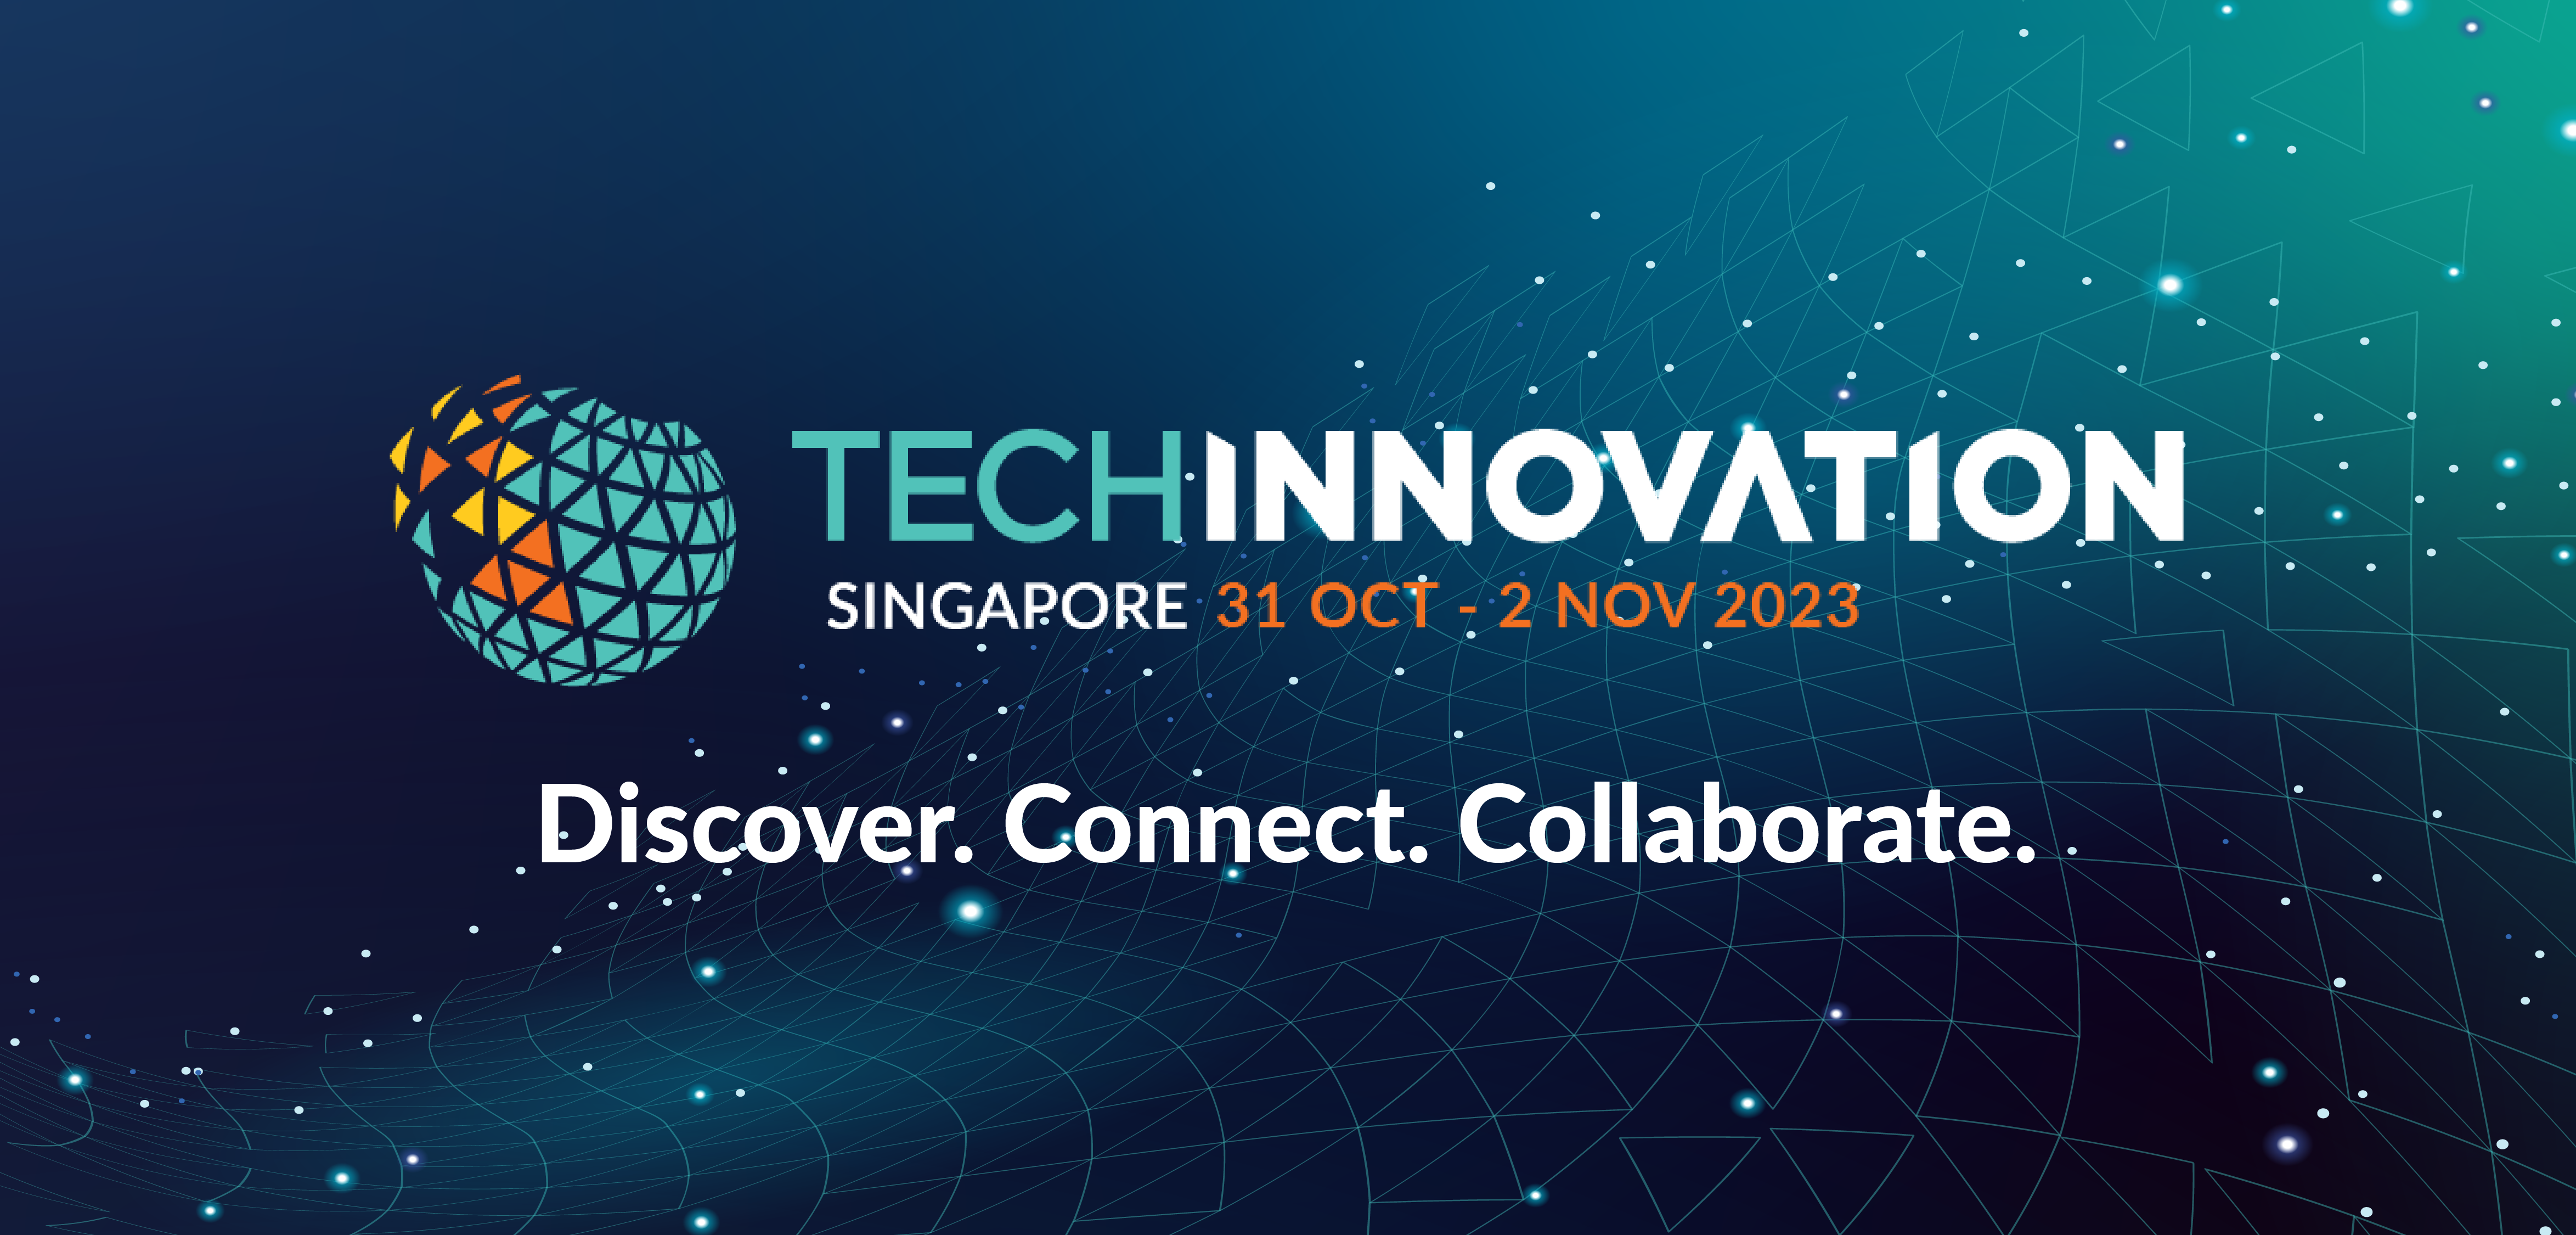 Tech Trailblazers: TechInnovation 2023 spotlights leading innovators